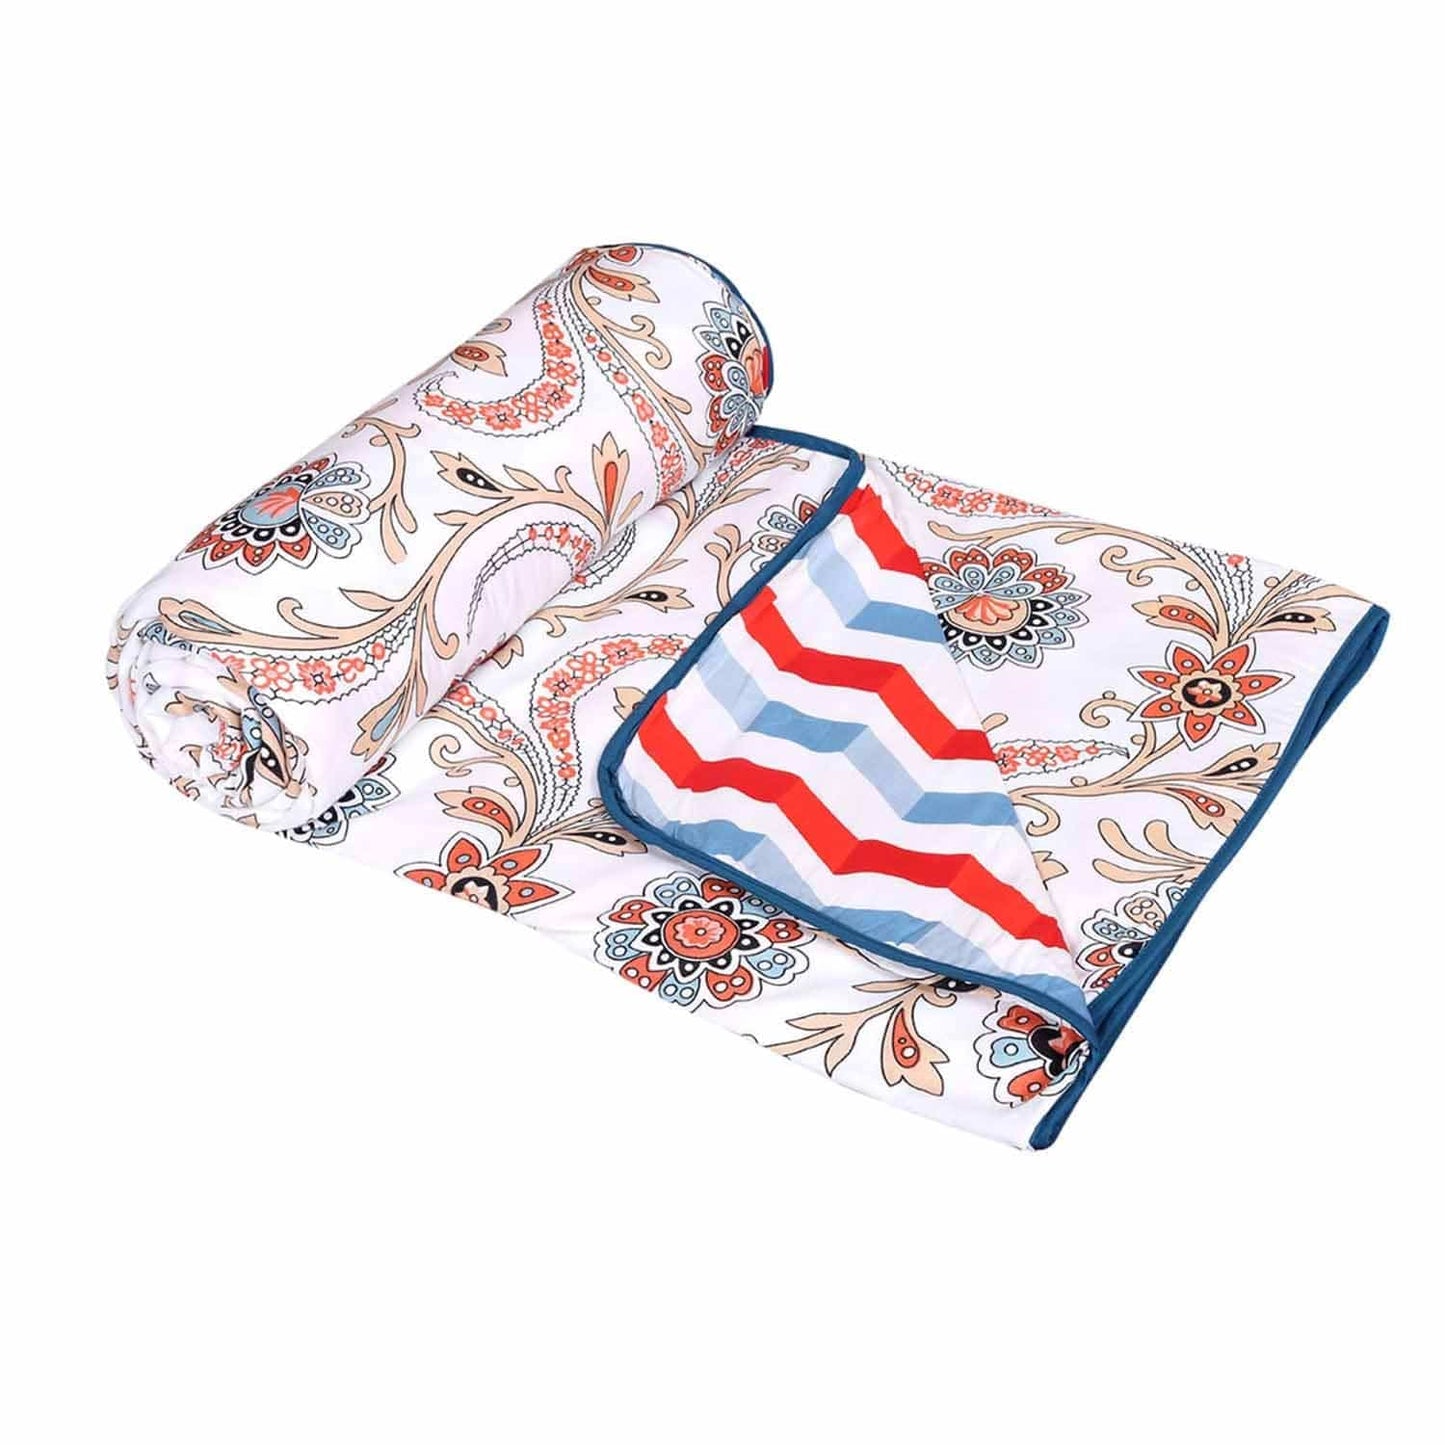 Artisanal Ottoman 100% Cotton Single/Double Size Reversible AC Blanket